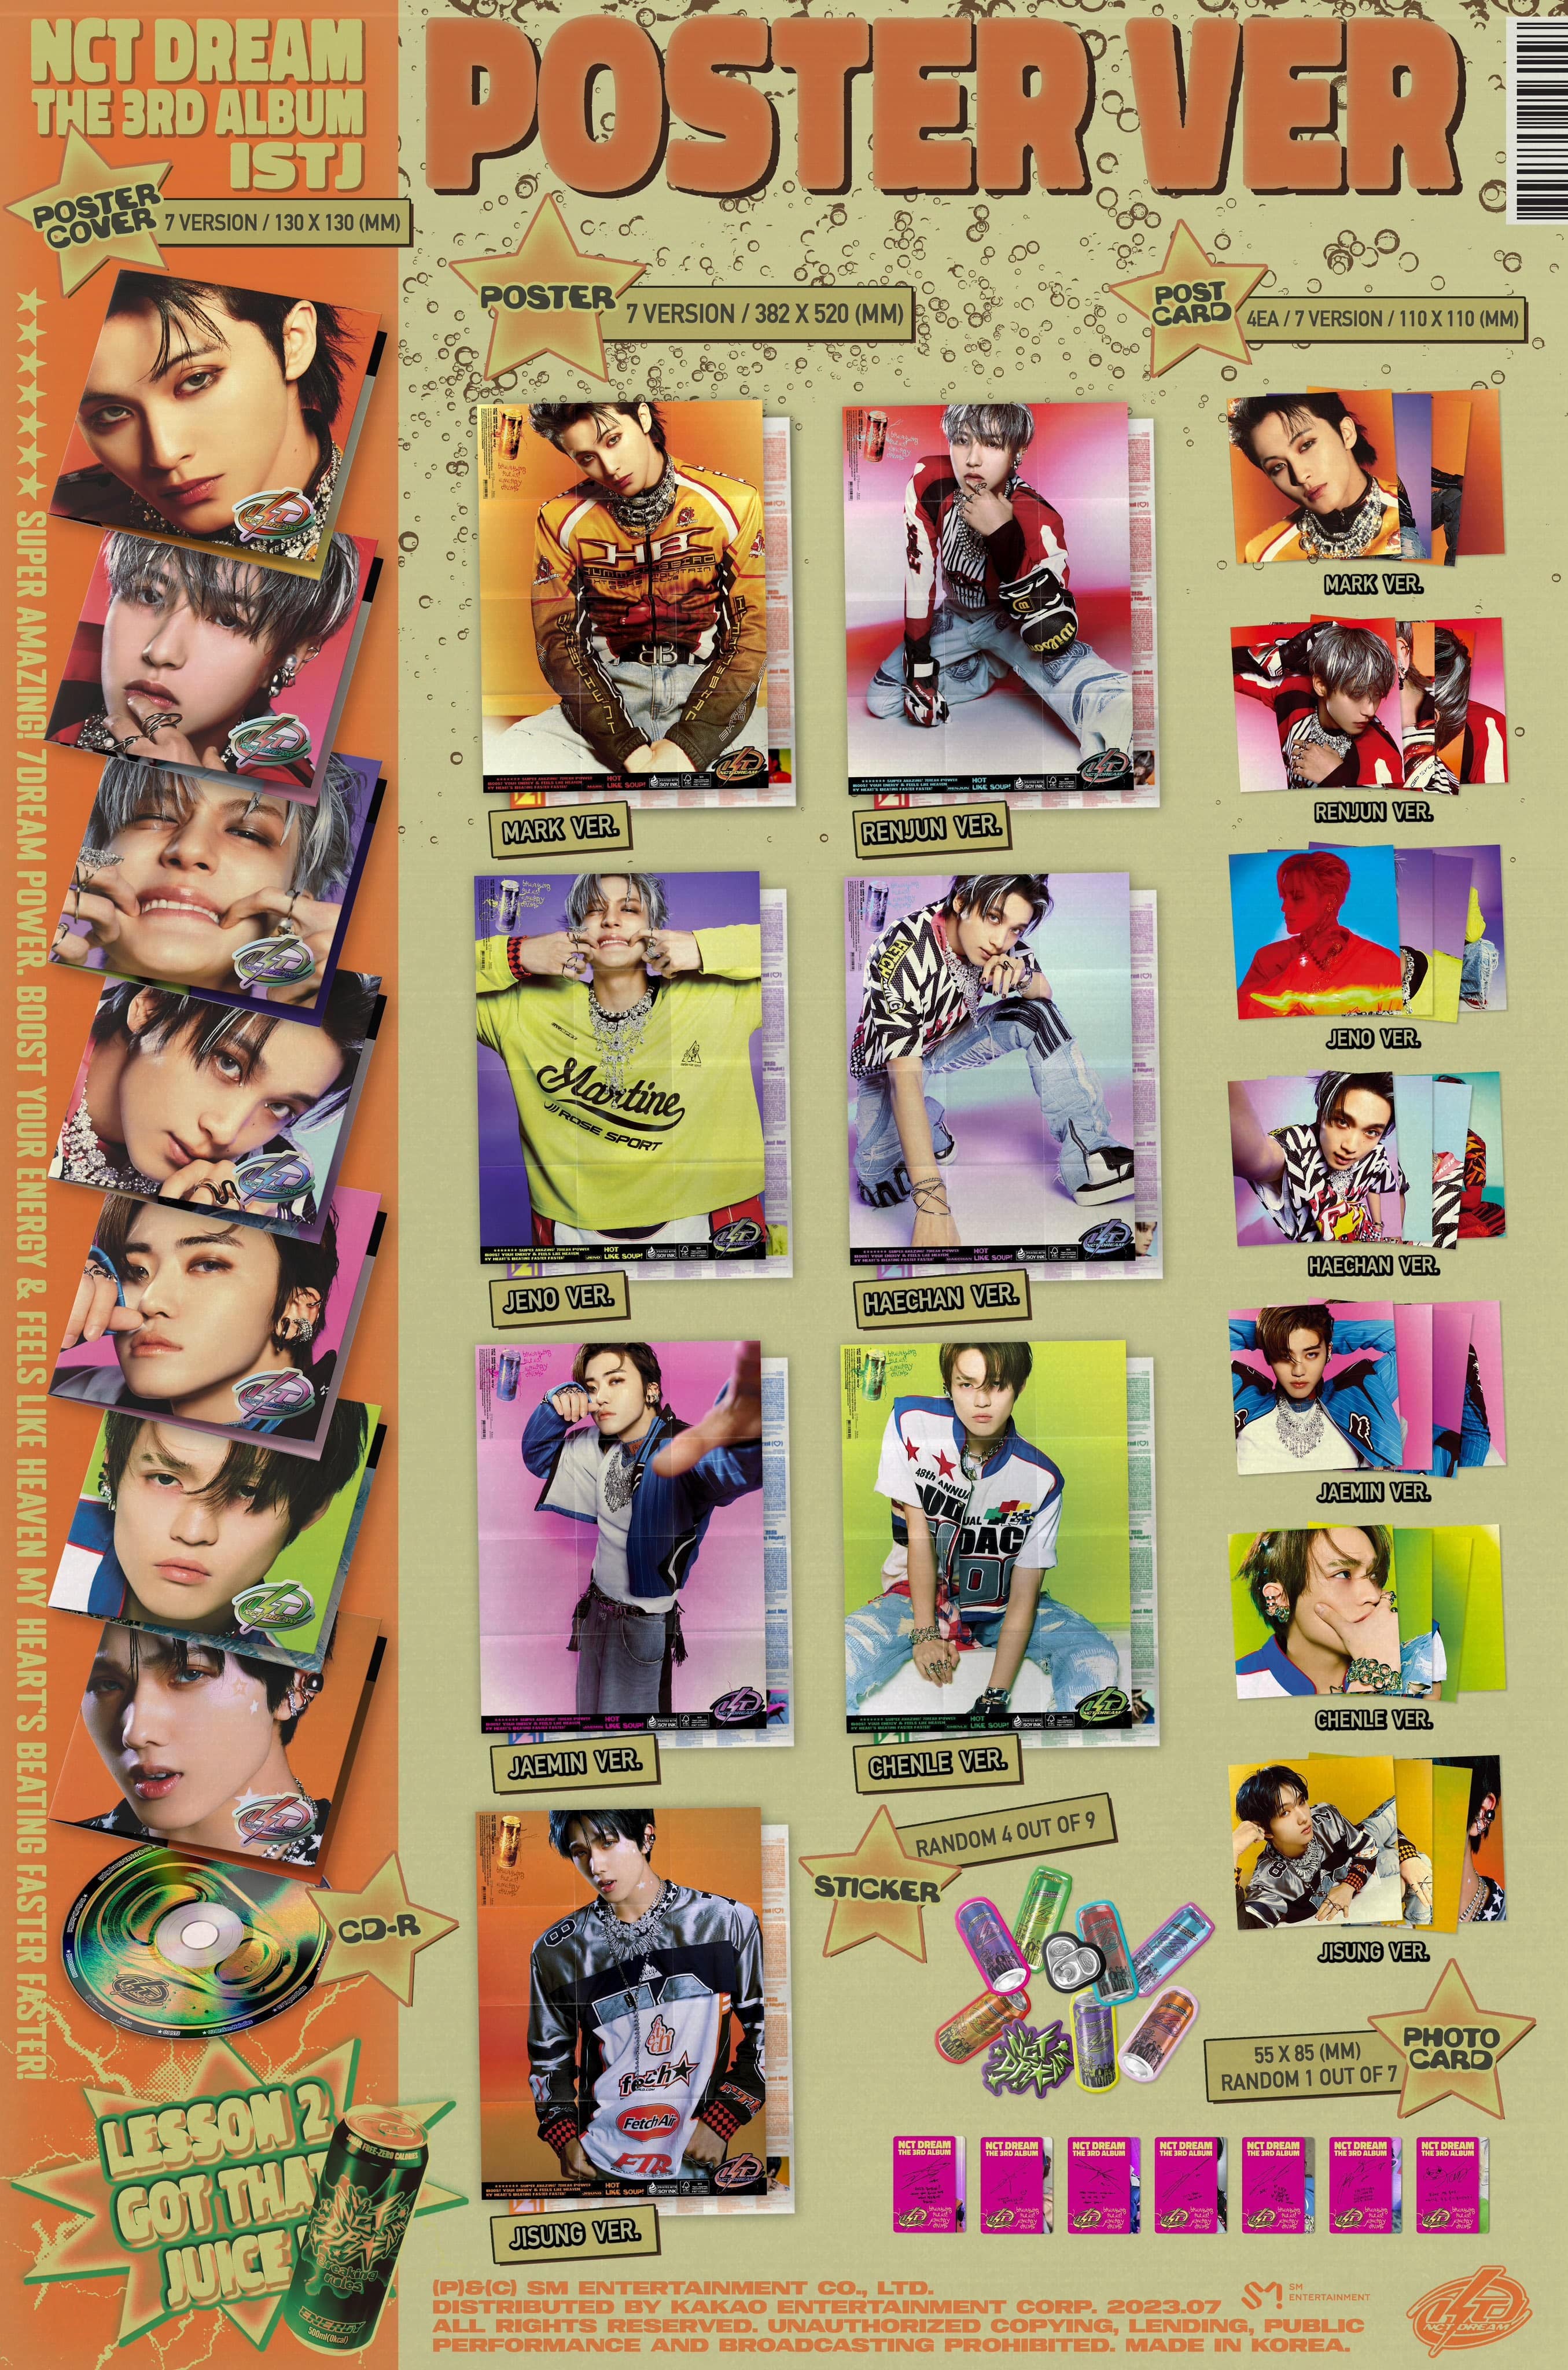 Korea Pop Store NCT DREAM - VOL.3 [ISTJ] (POSTER Ver.) Kawaii Gifts